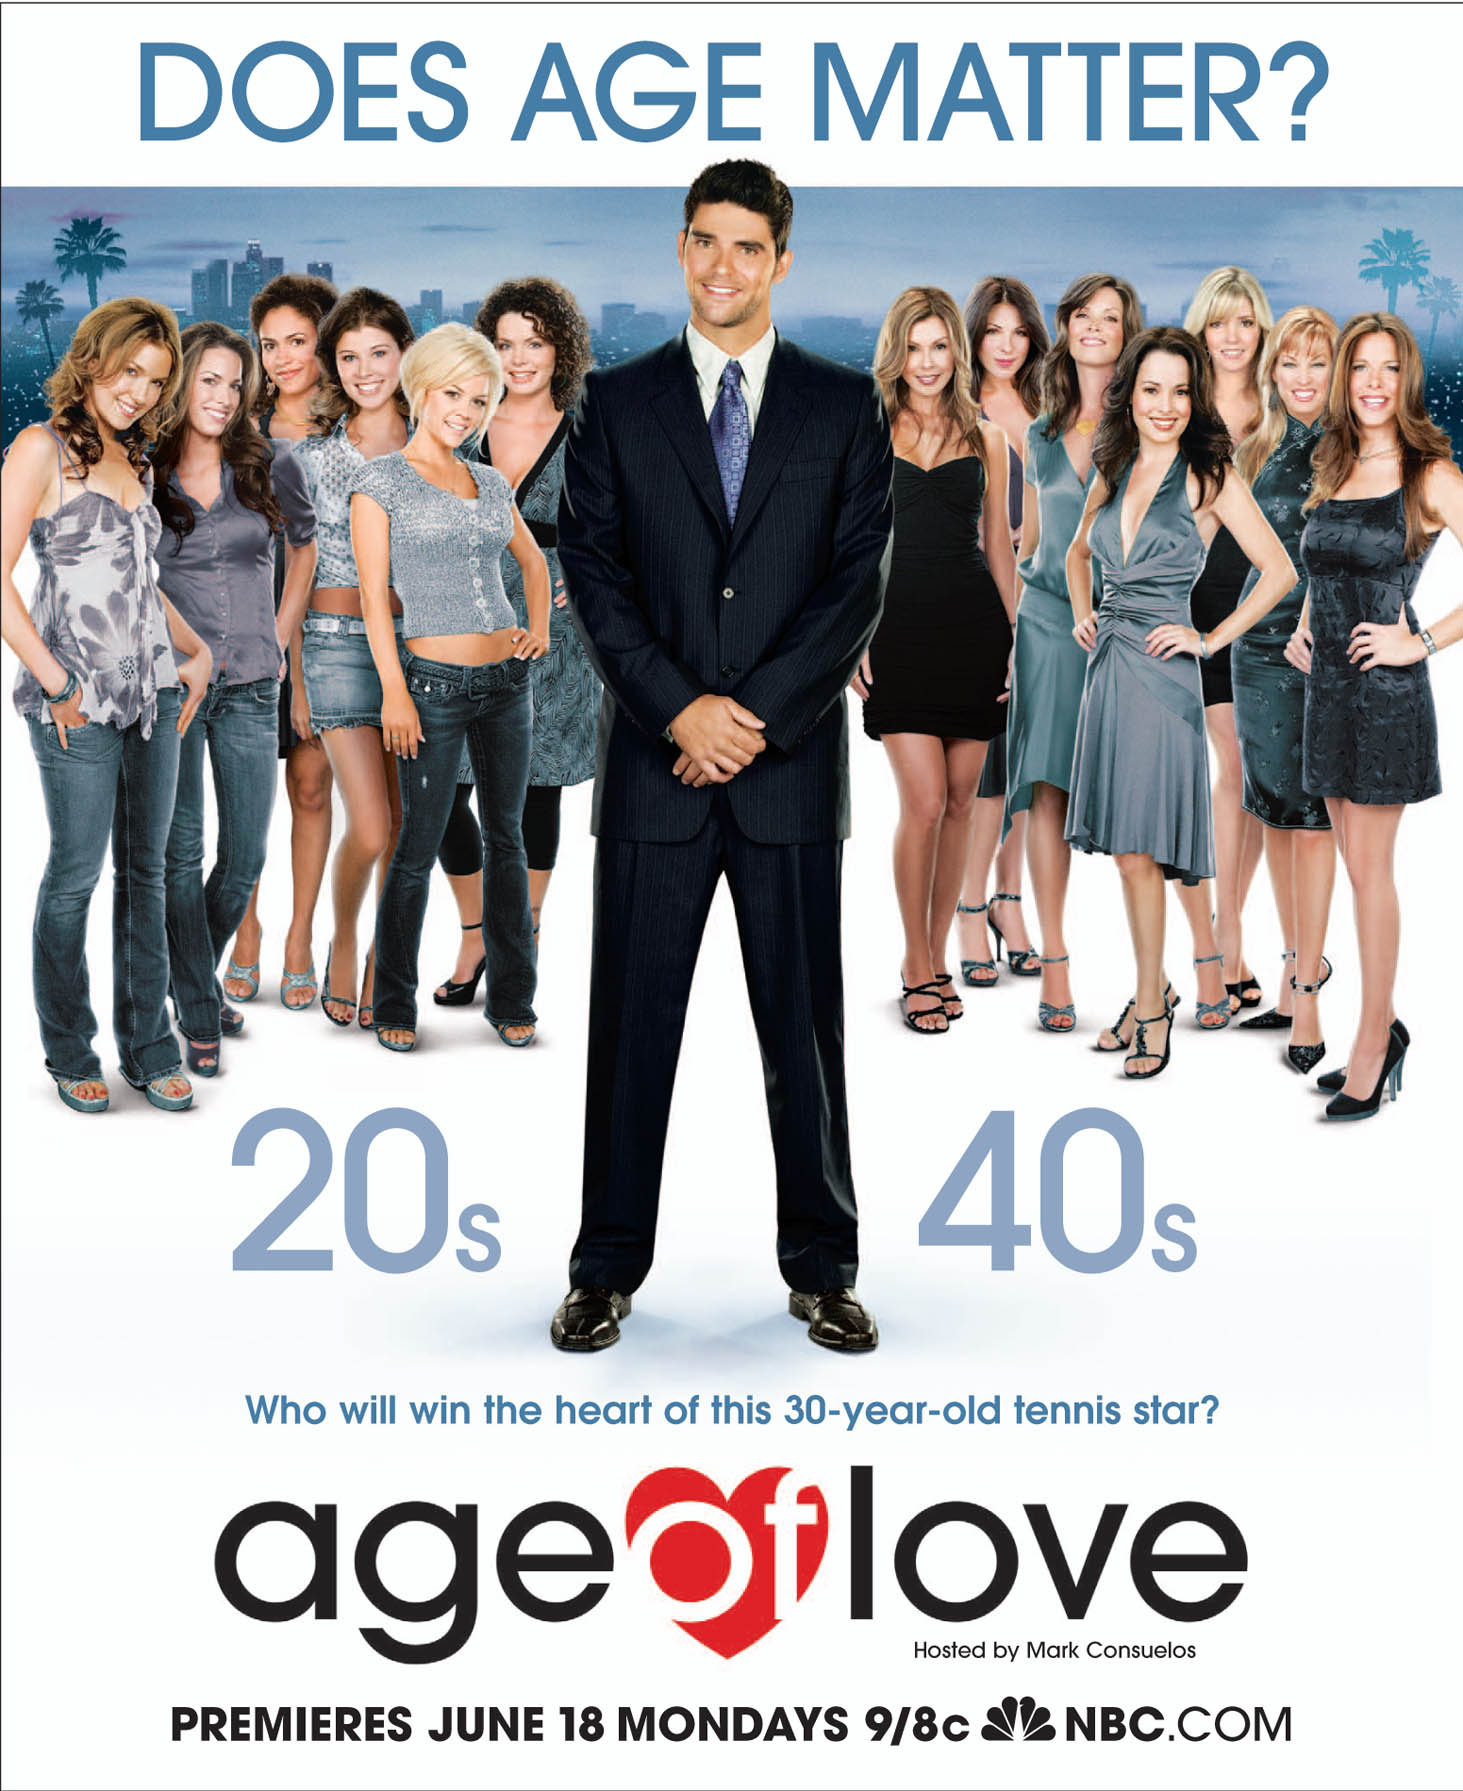 Age of Love Photo, People Magazine